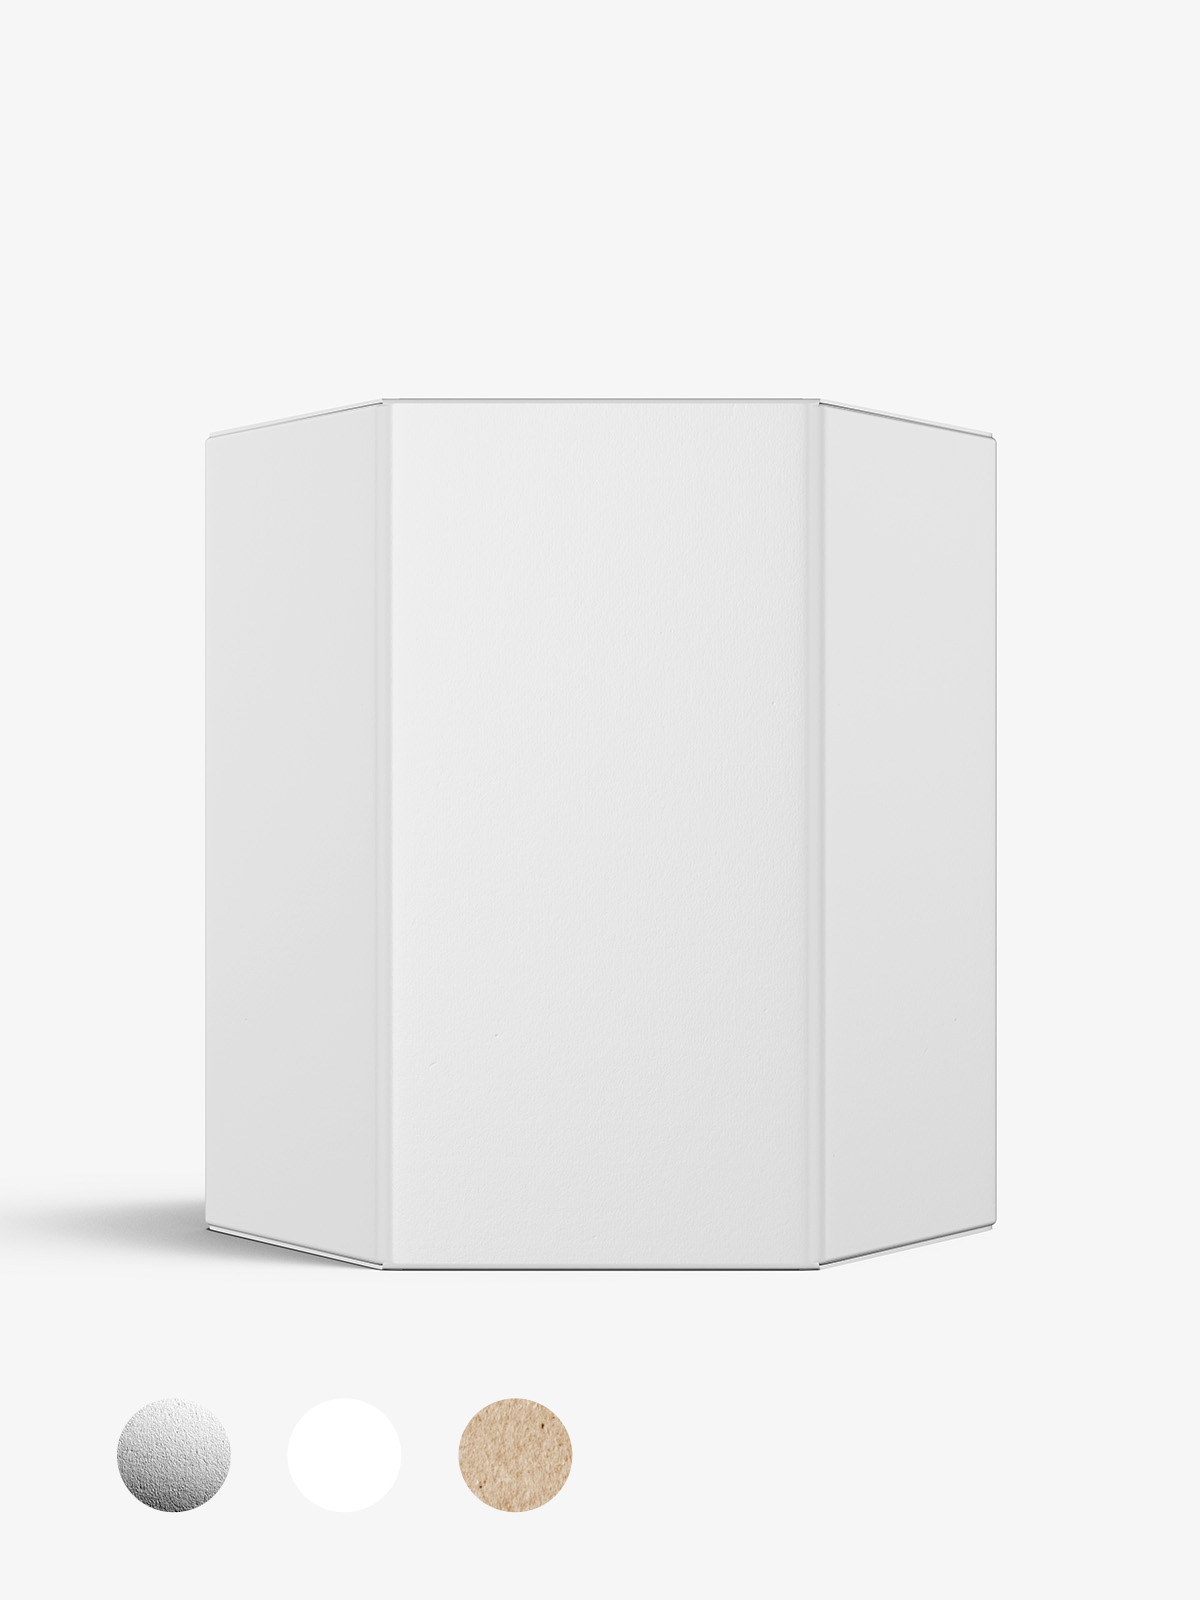 Download Hexagonal box mockup / white - metallic - kraft - Smarty ...